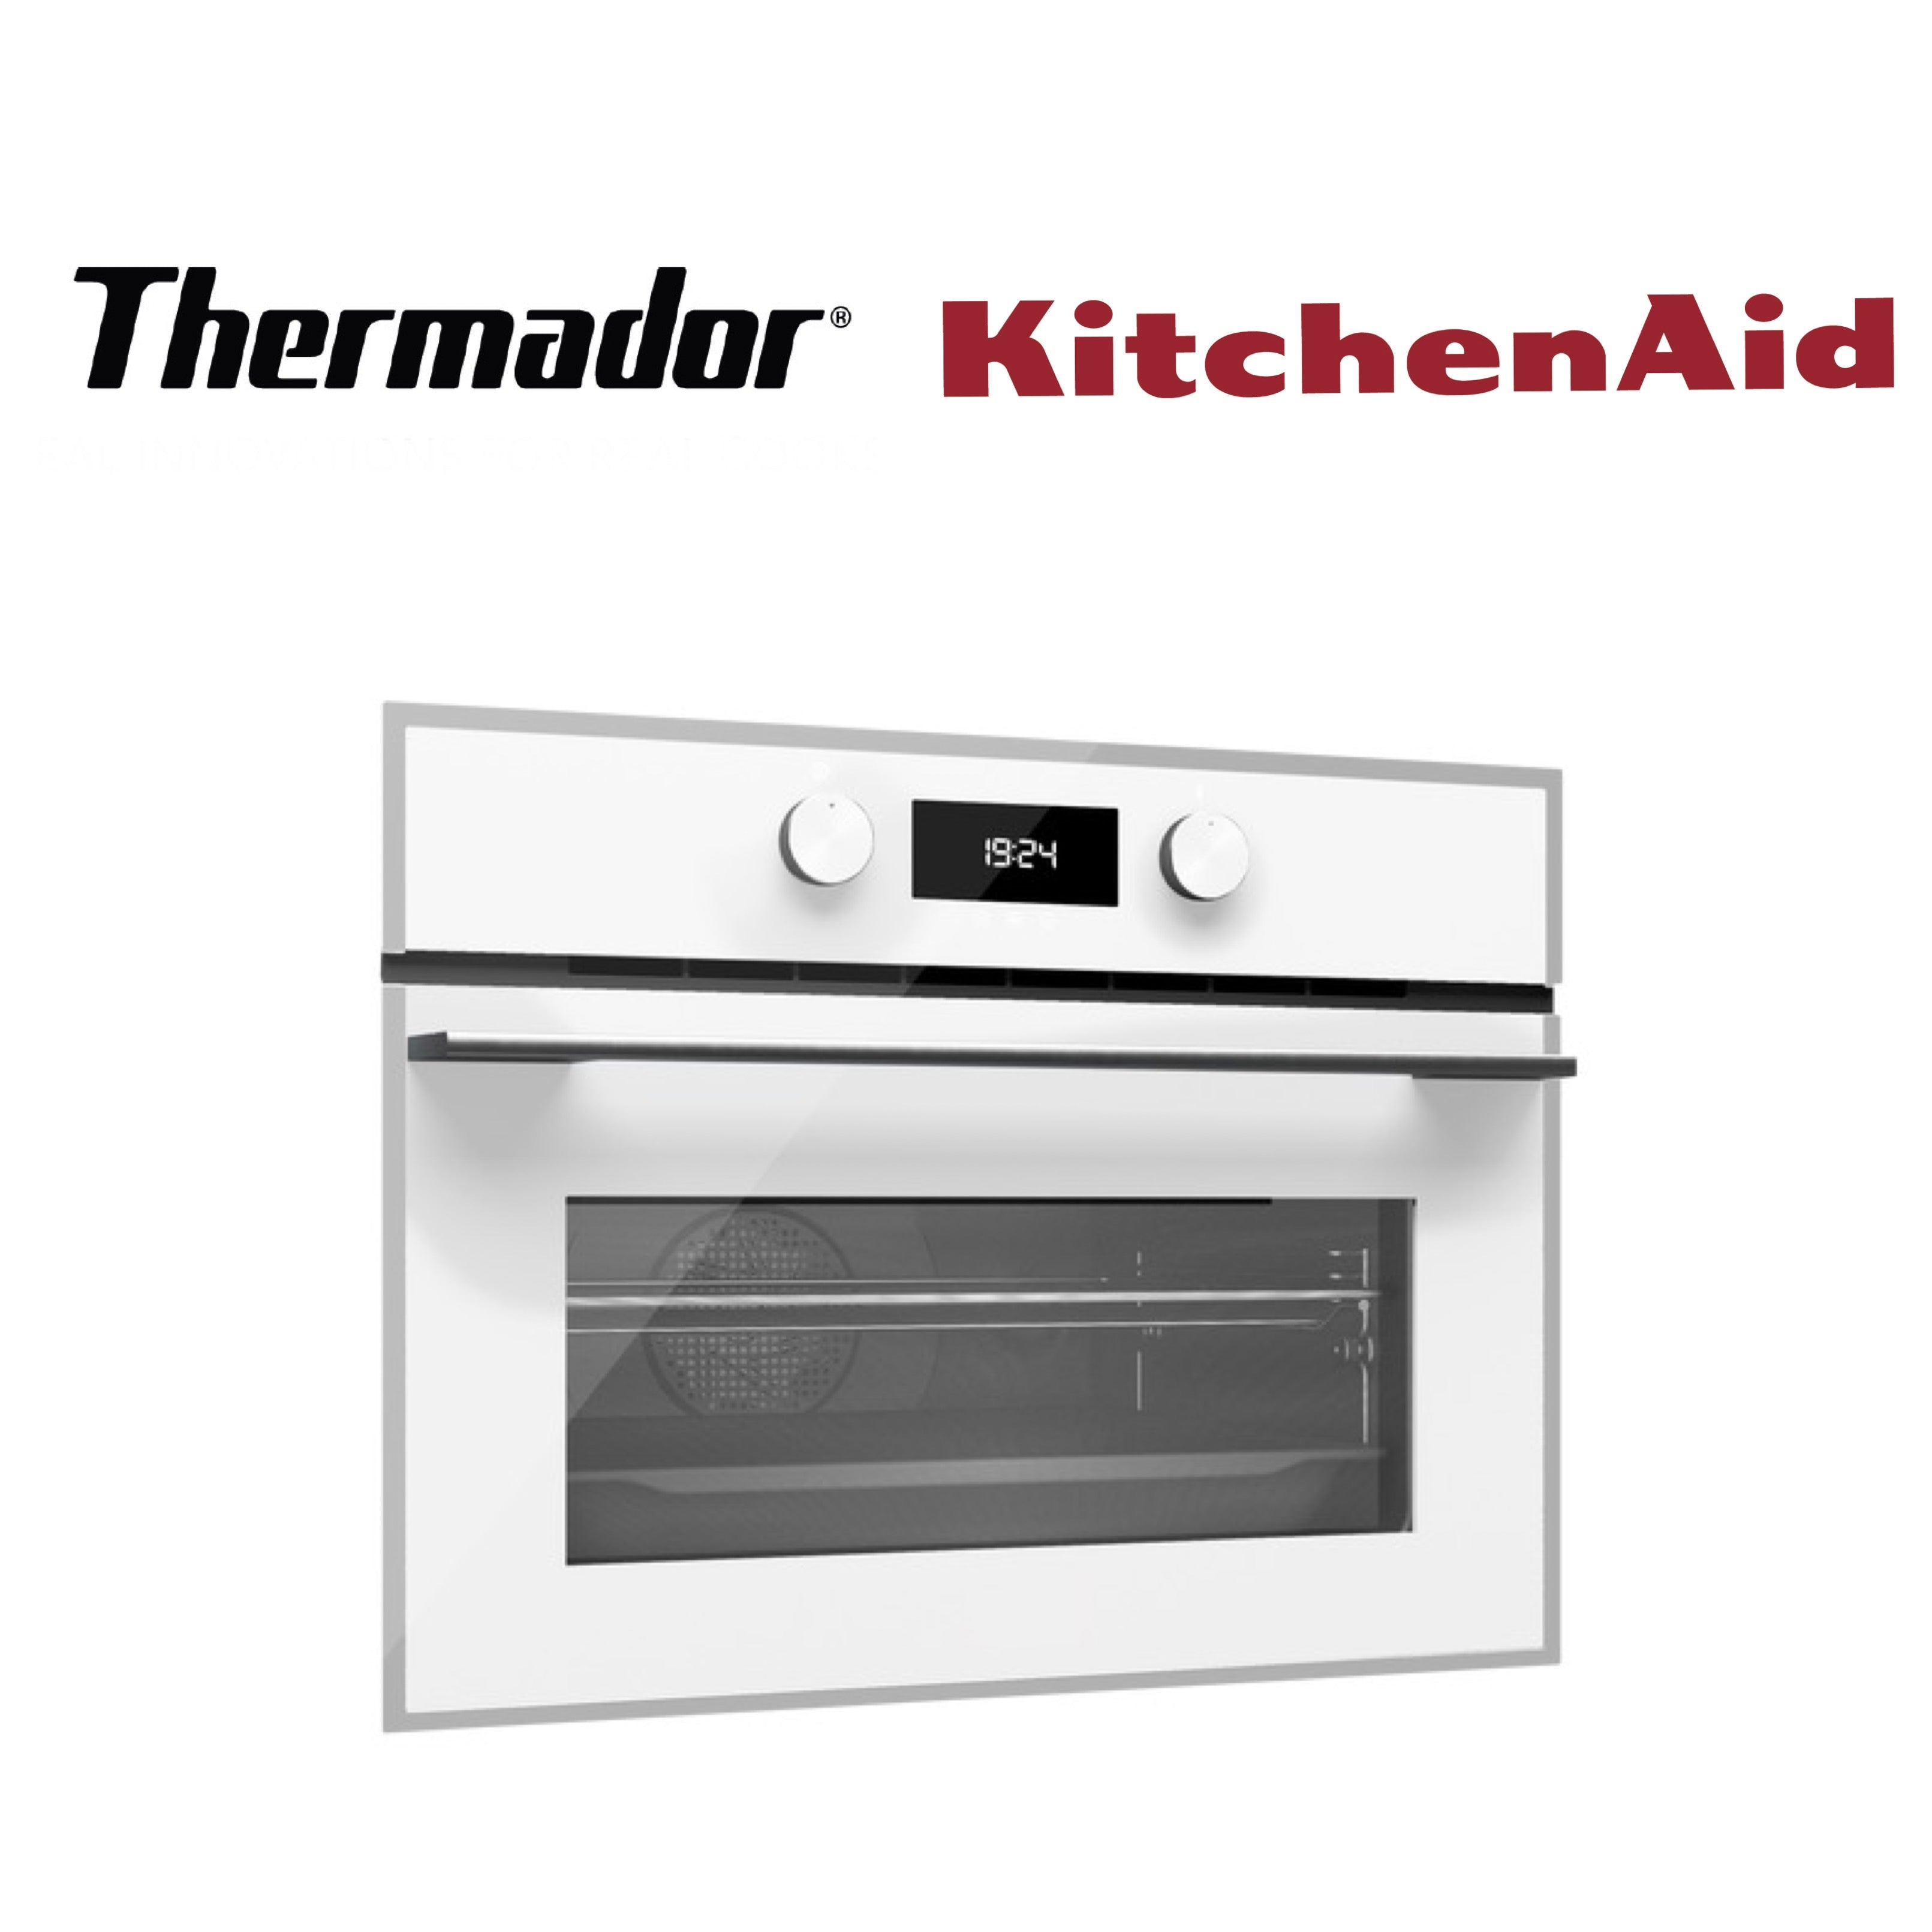 Thermador Vs Kitchenaid Ovens Town